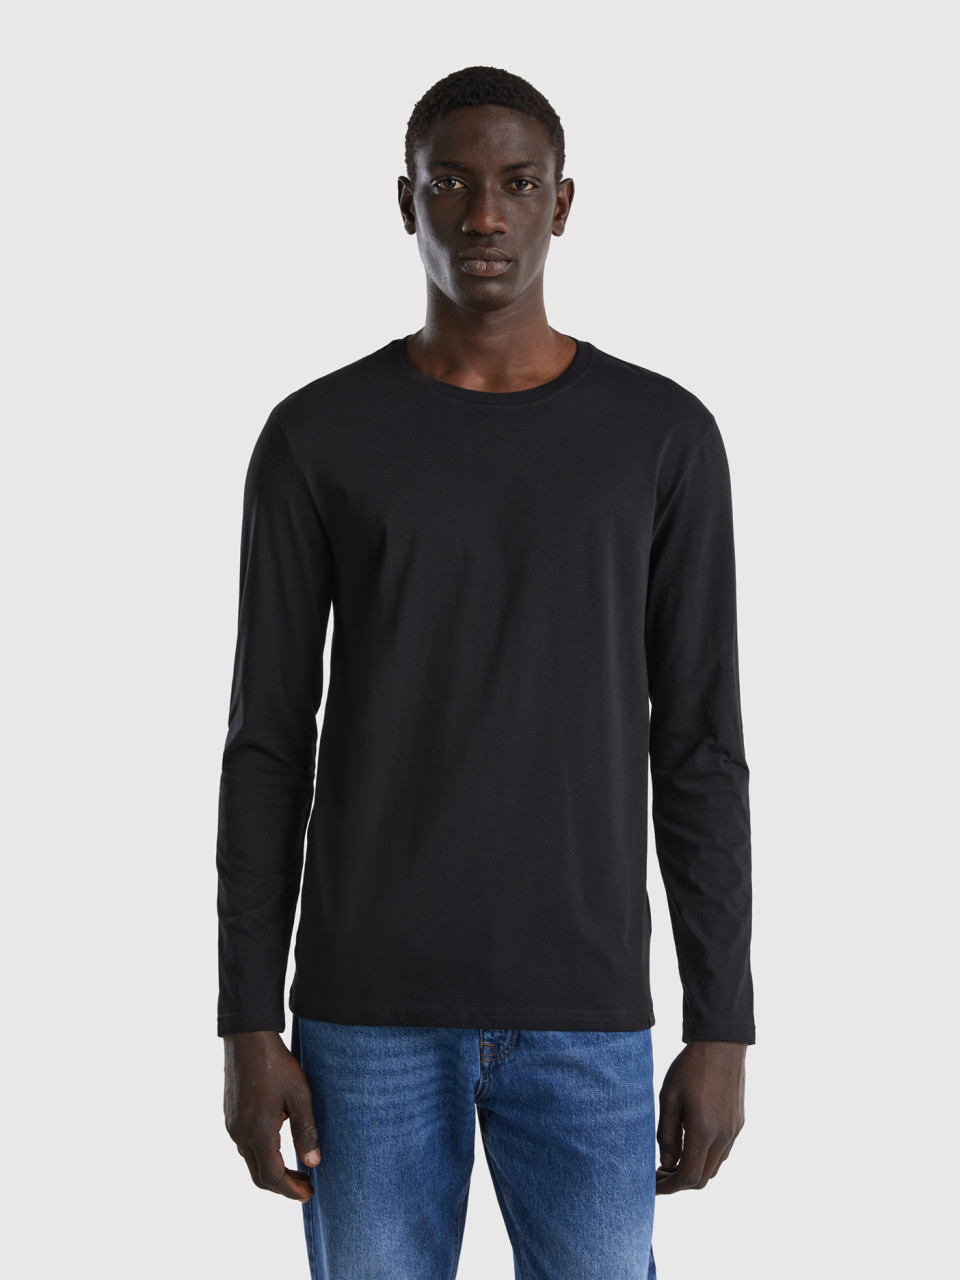 Benetton, Long Sleeve Pure Cotton T-shirt, Black, Men